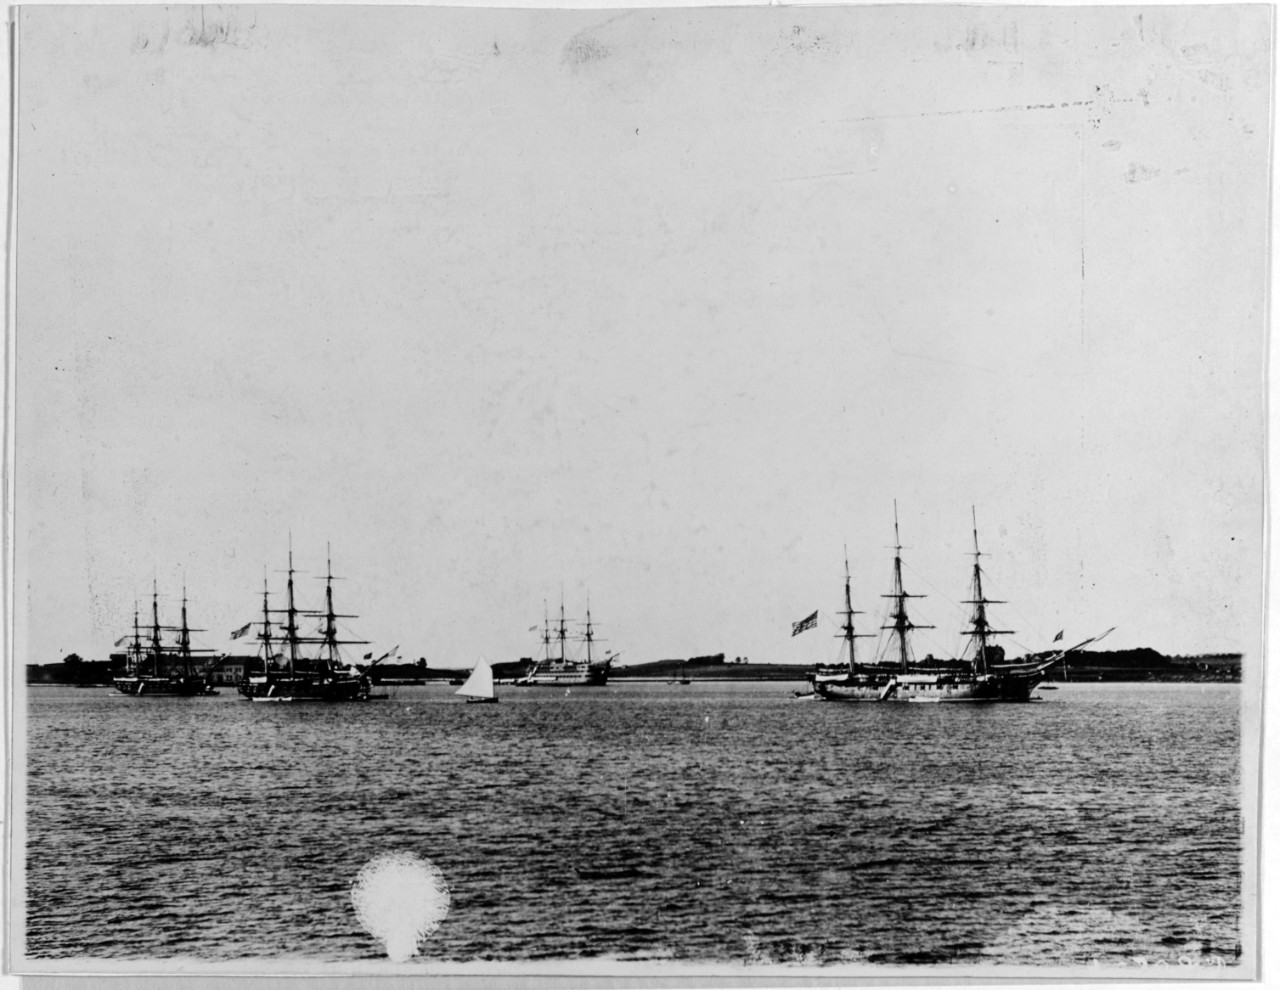 USS JAMESTOWN (1844-1913)